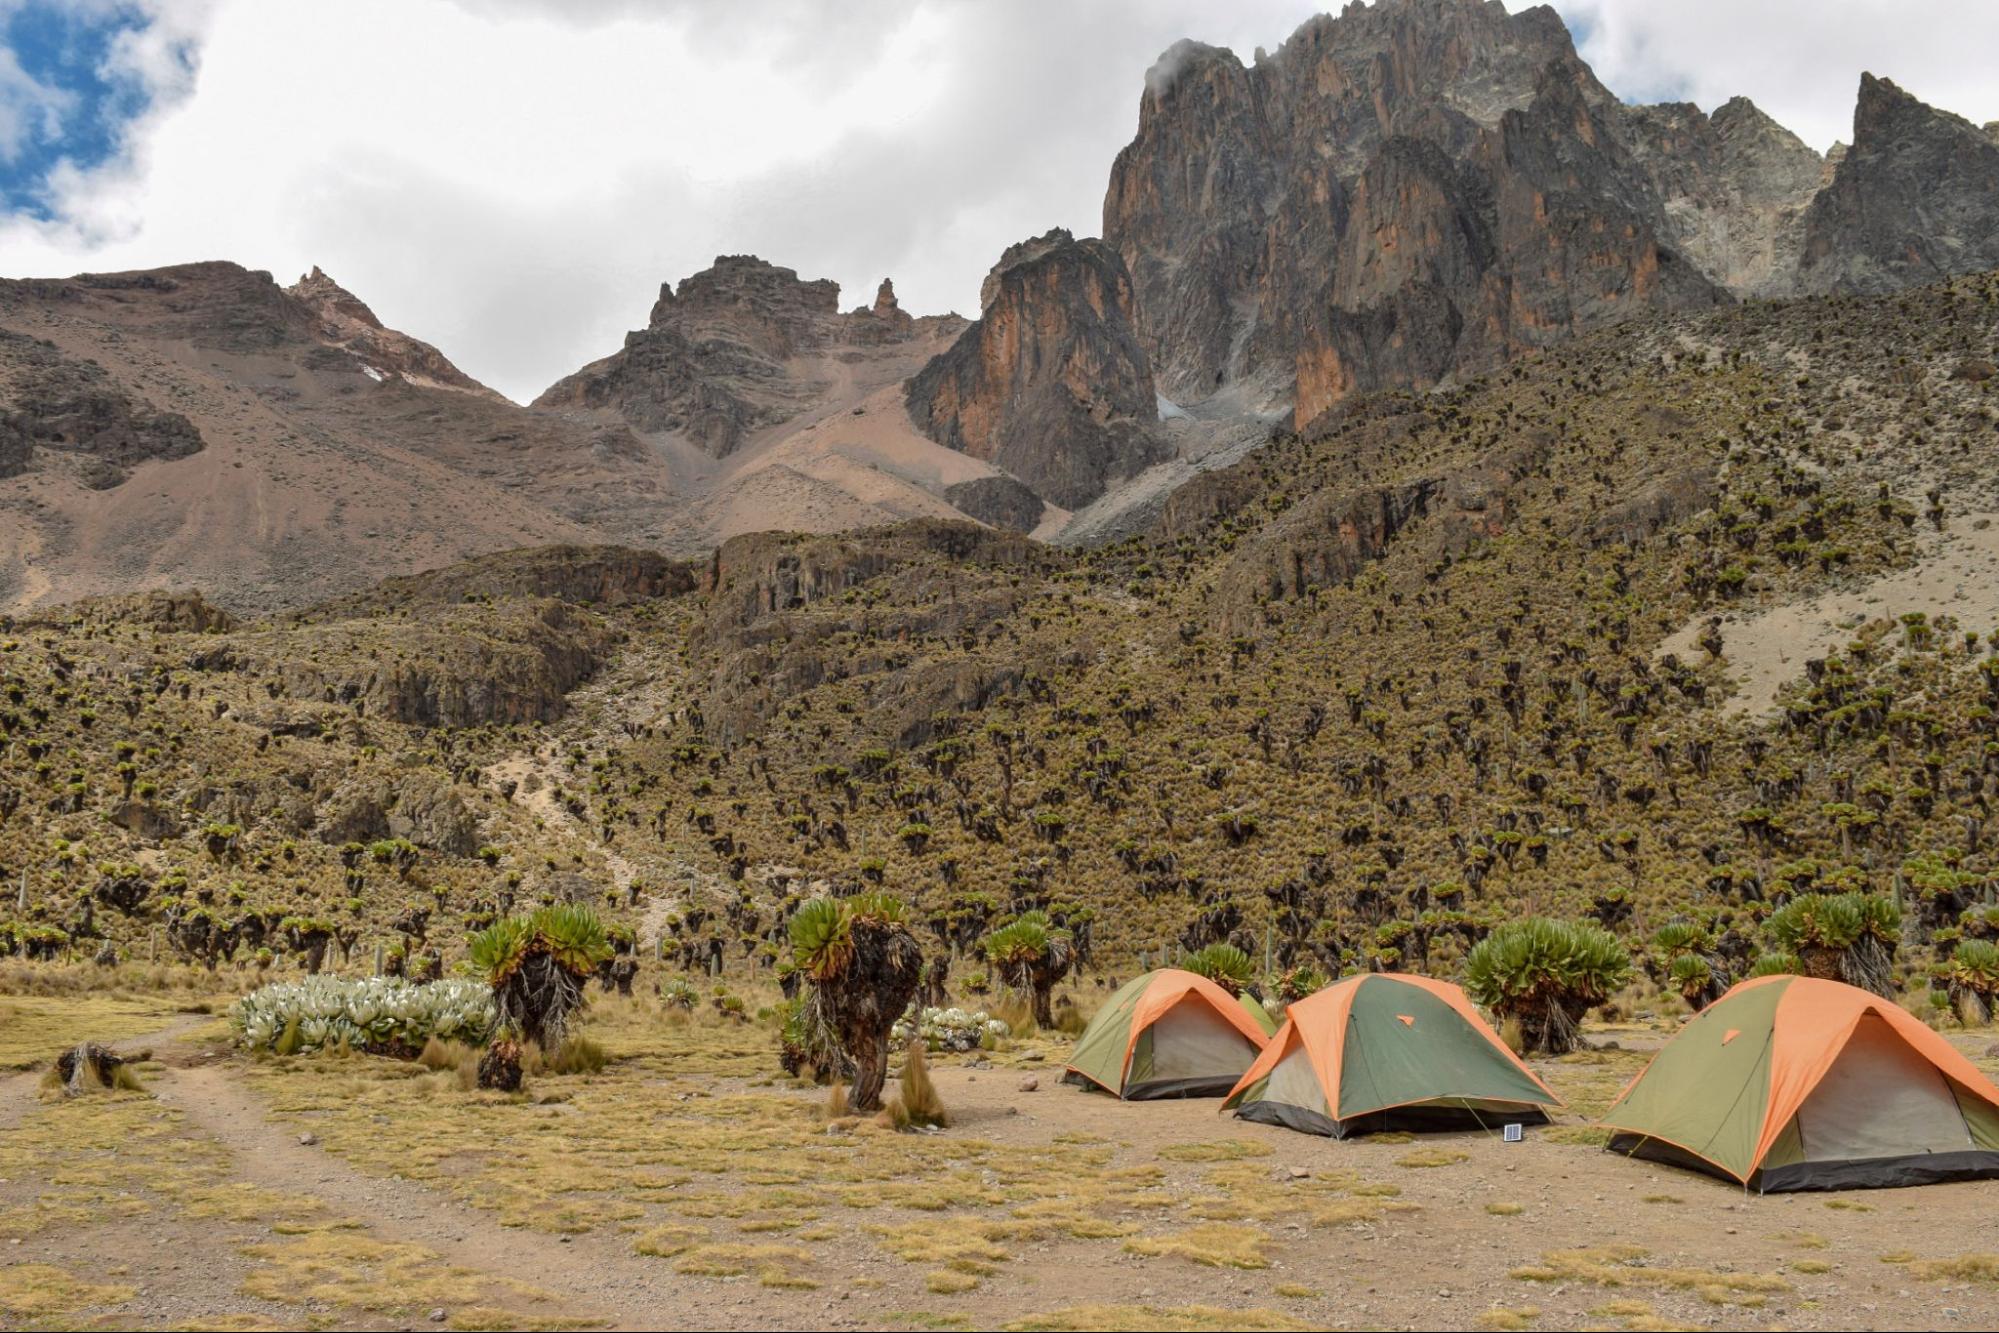 Camping in Mt. Kenya National Park